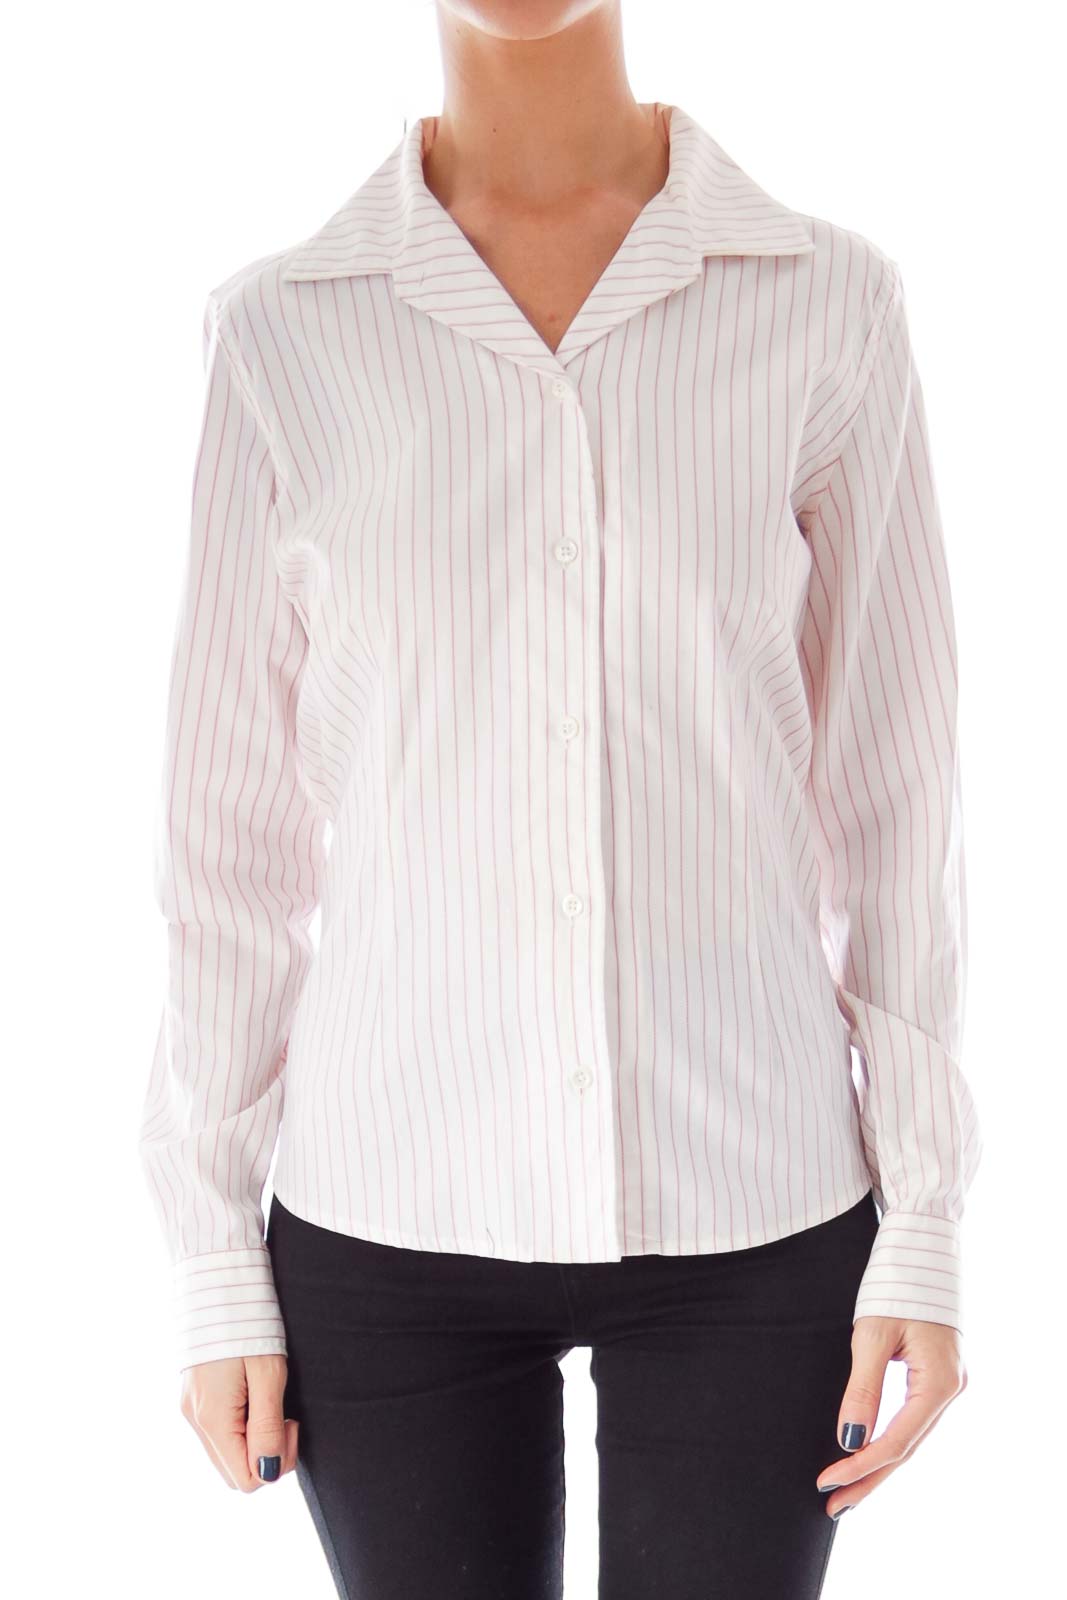 White & Pink Stripe Shirt Front